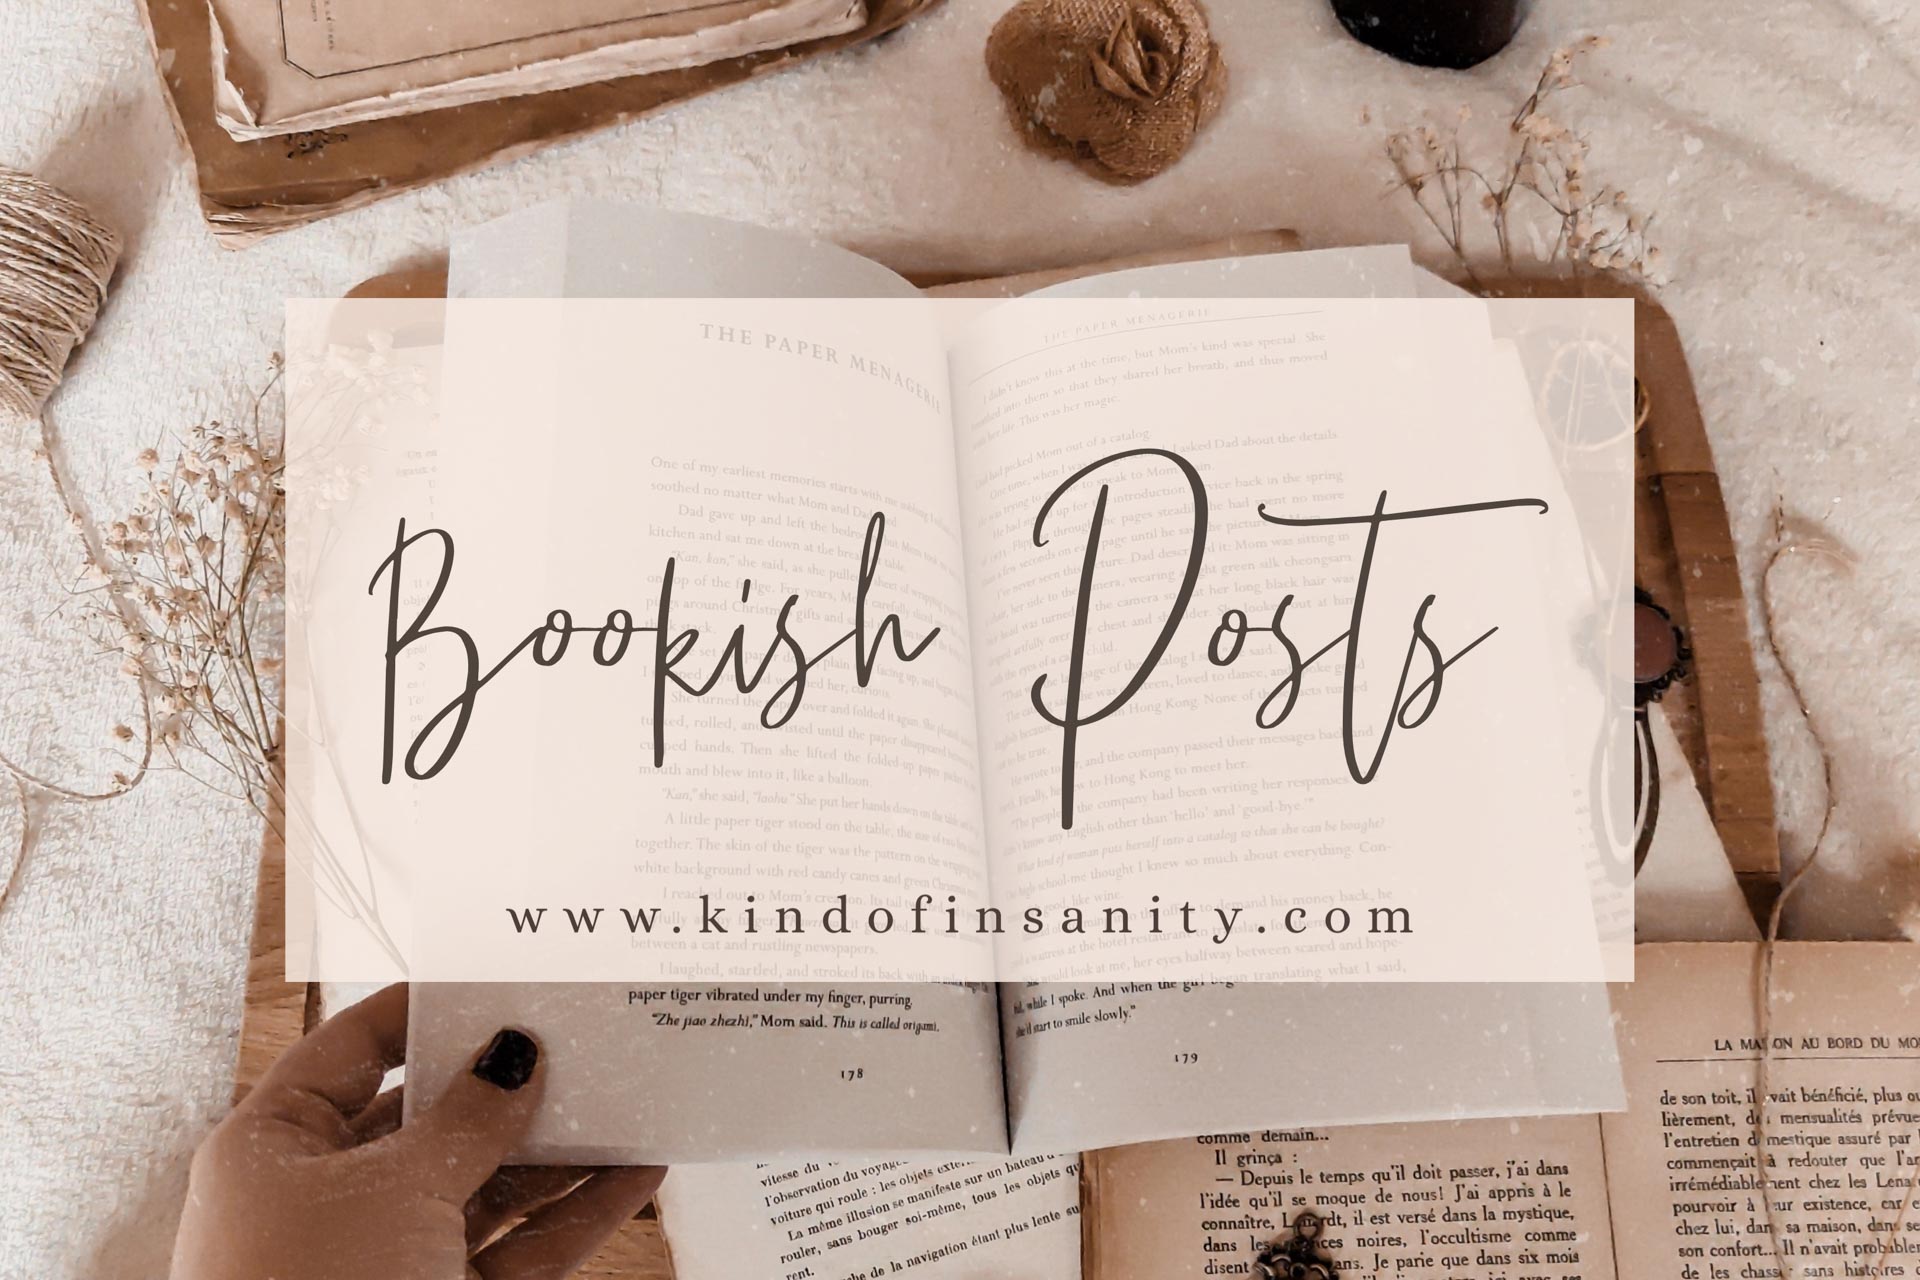 Bookish posts